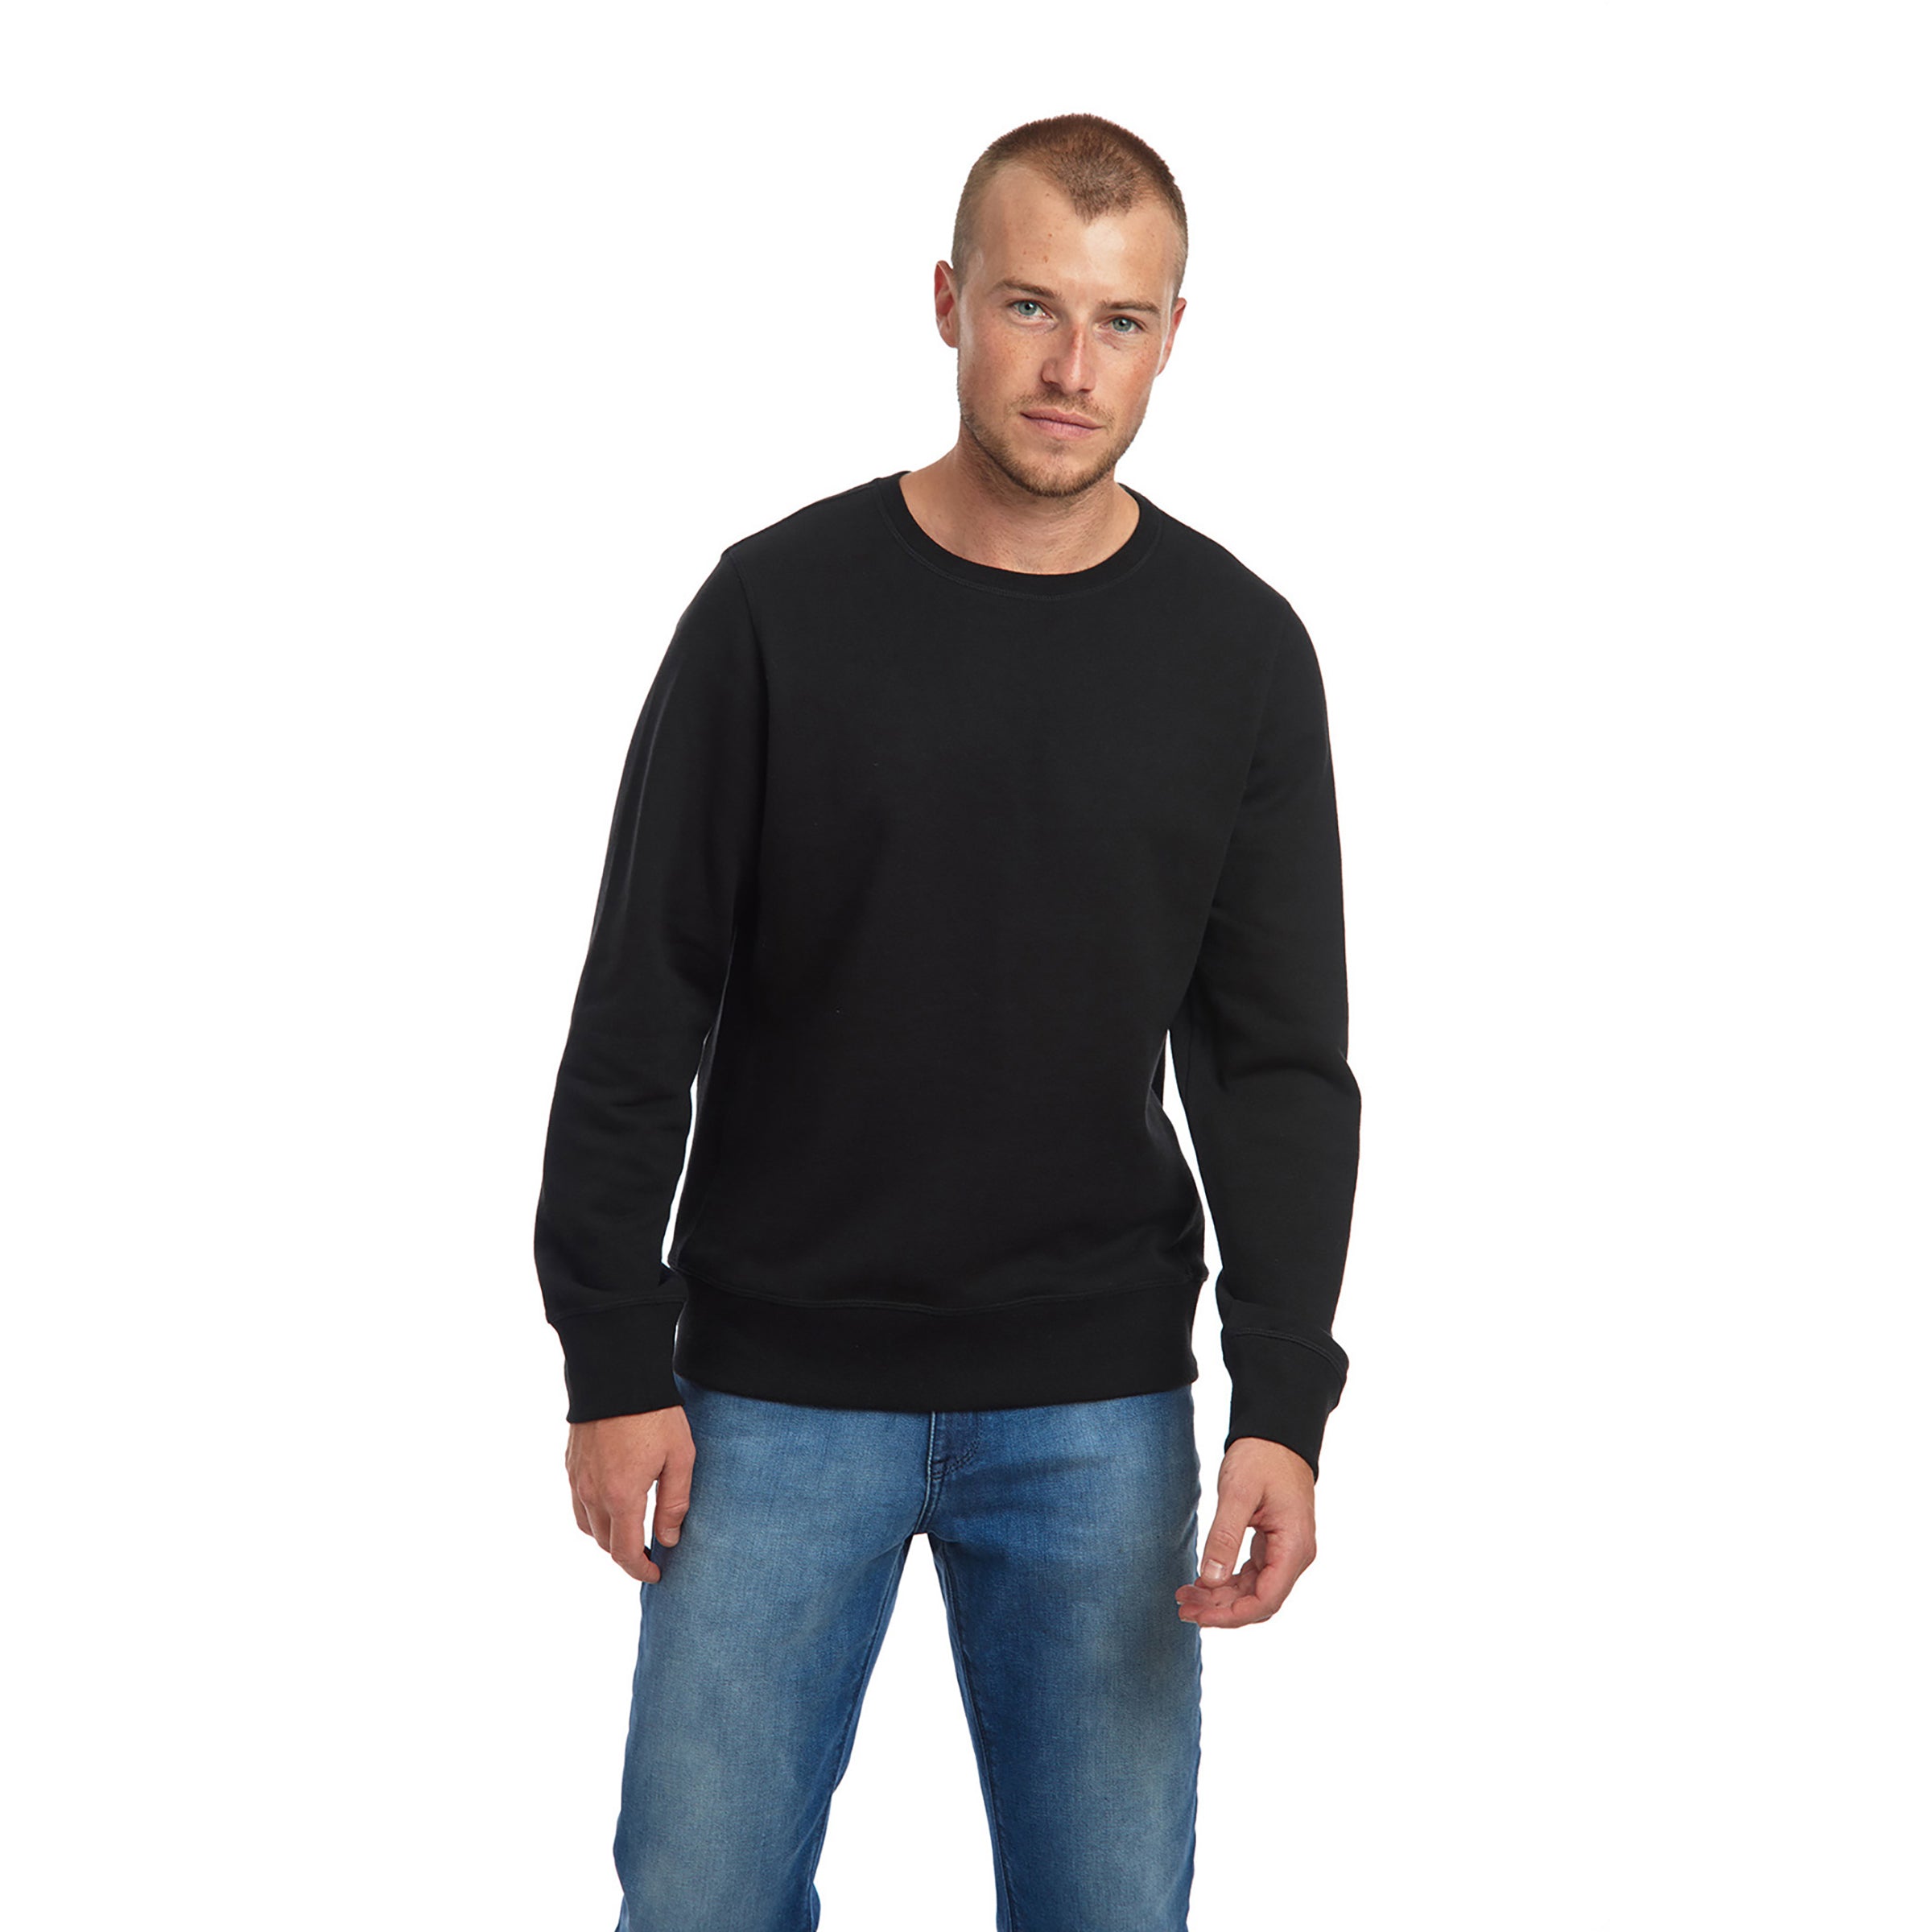 Men wearing Black The French Terry Sweatshirt Hooper